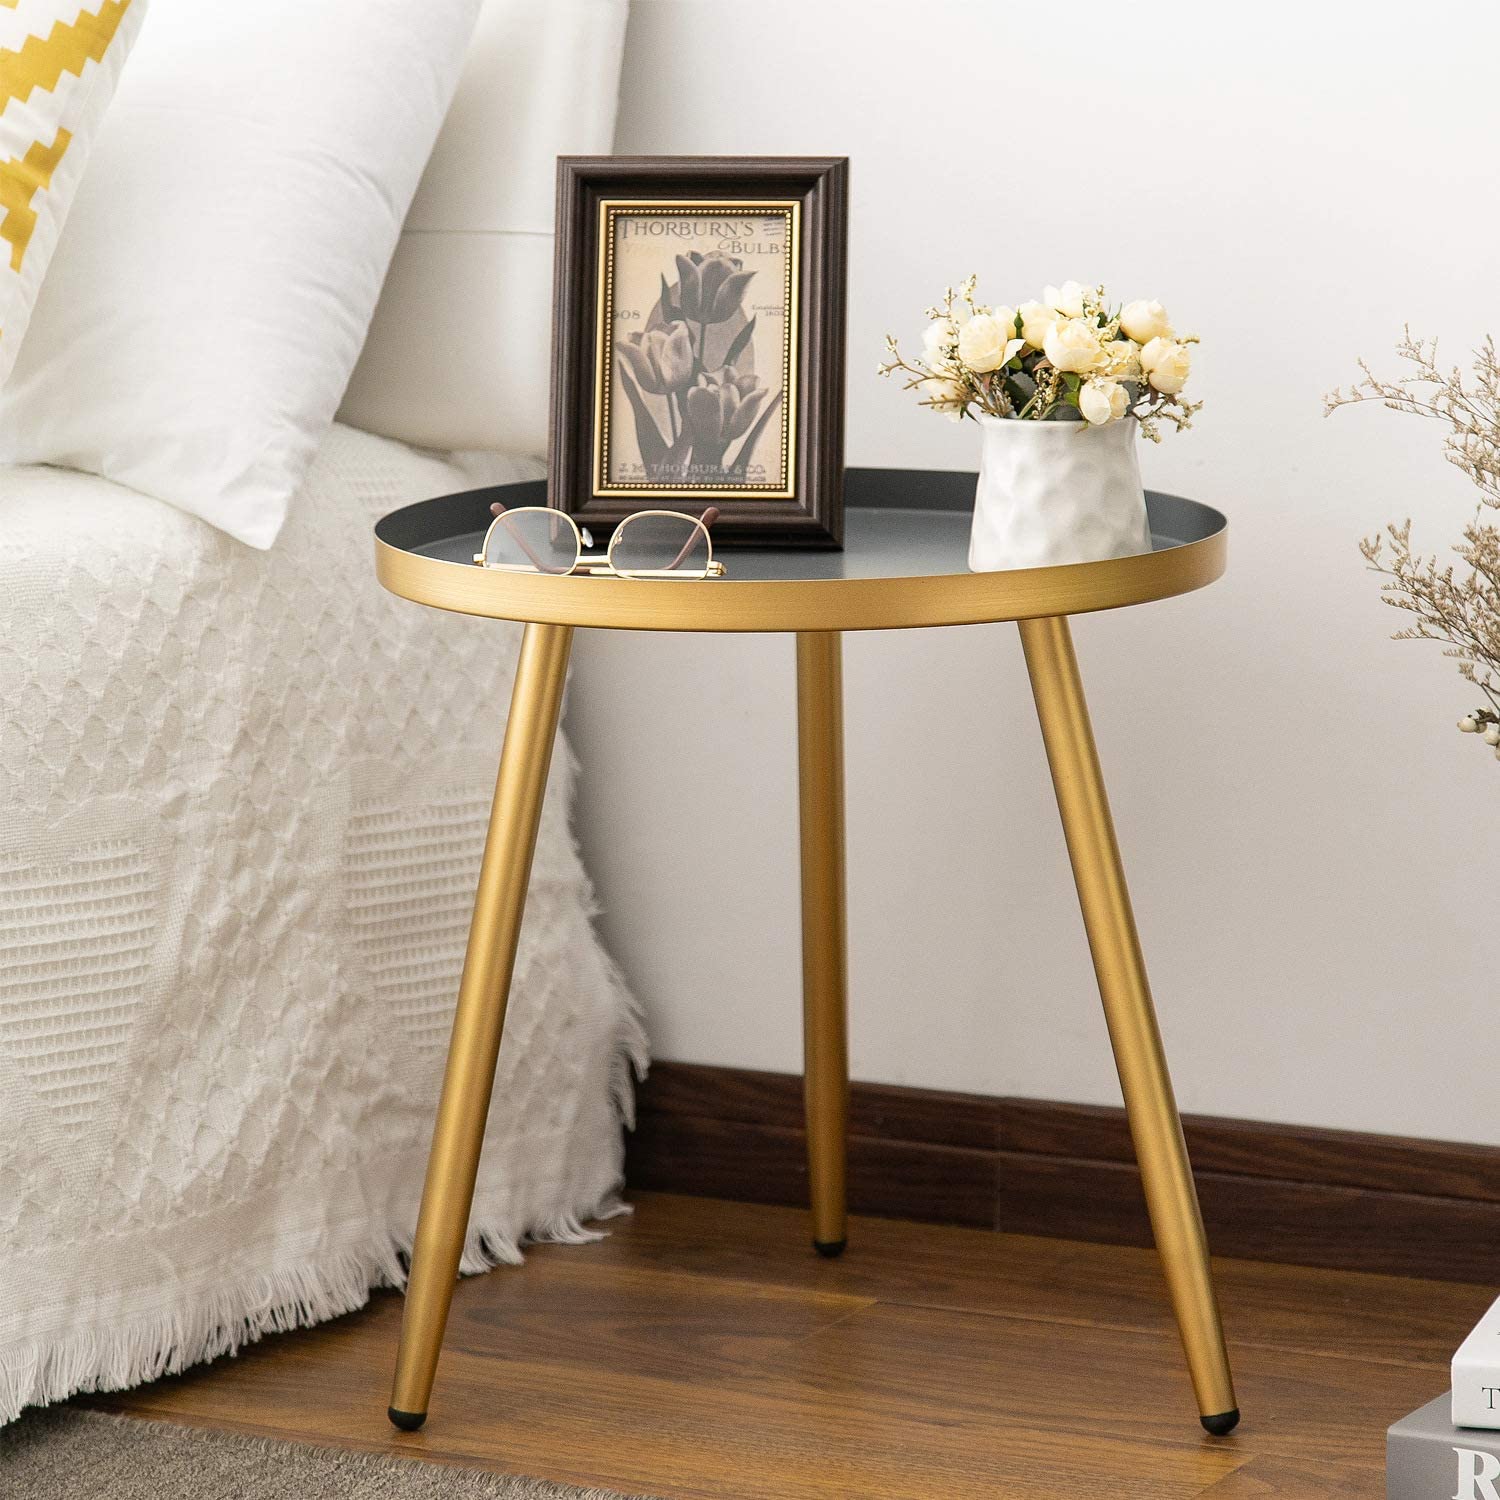 Round Side Metal Table, Tea Sofa Table for Living Room Bedroom,Anti-Rust and Waterproof, Black - image 1 of 8